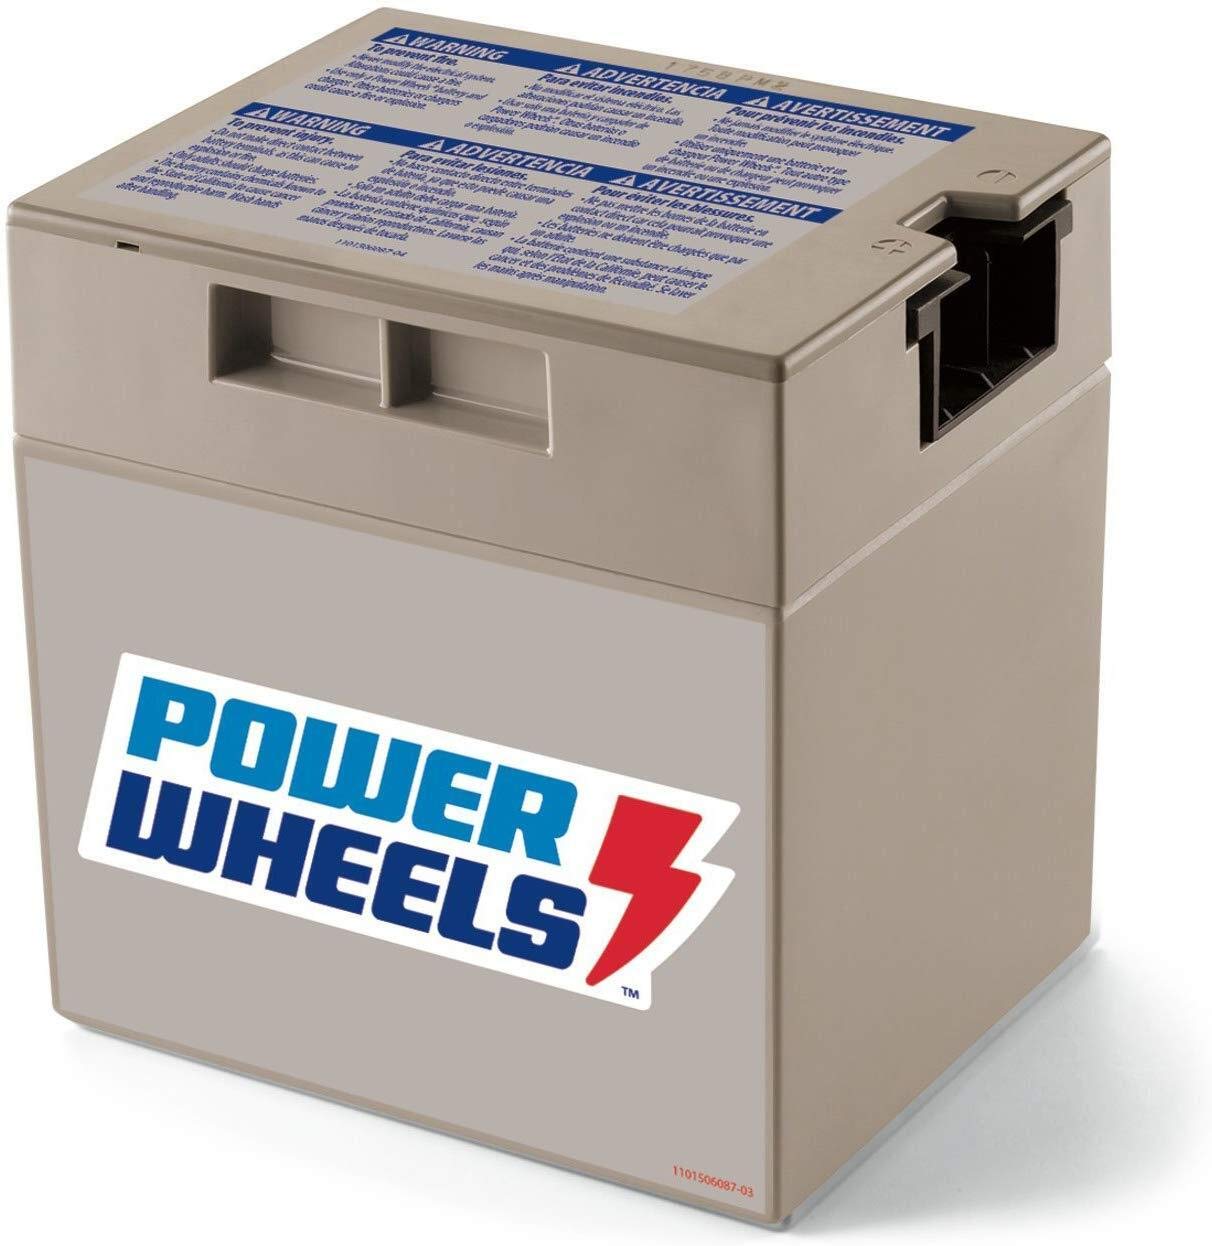 Power Wheels 12-Volt Rechargeable Replacement Battery, Multicolor